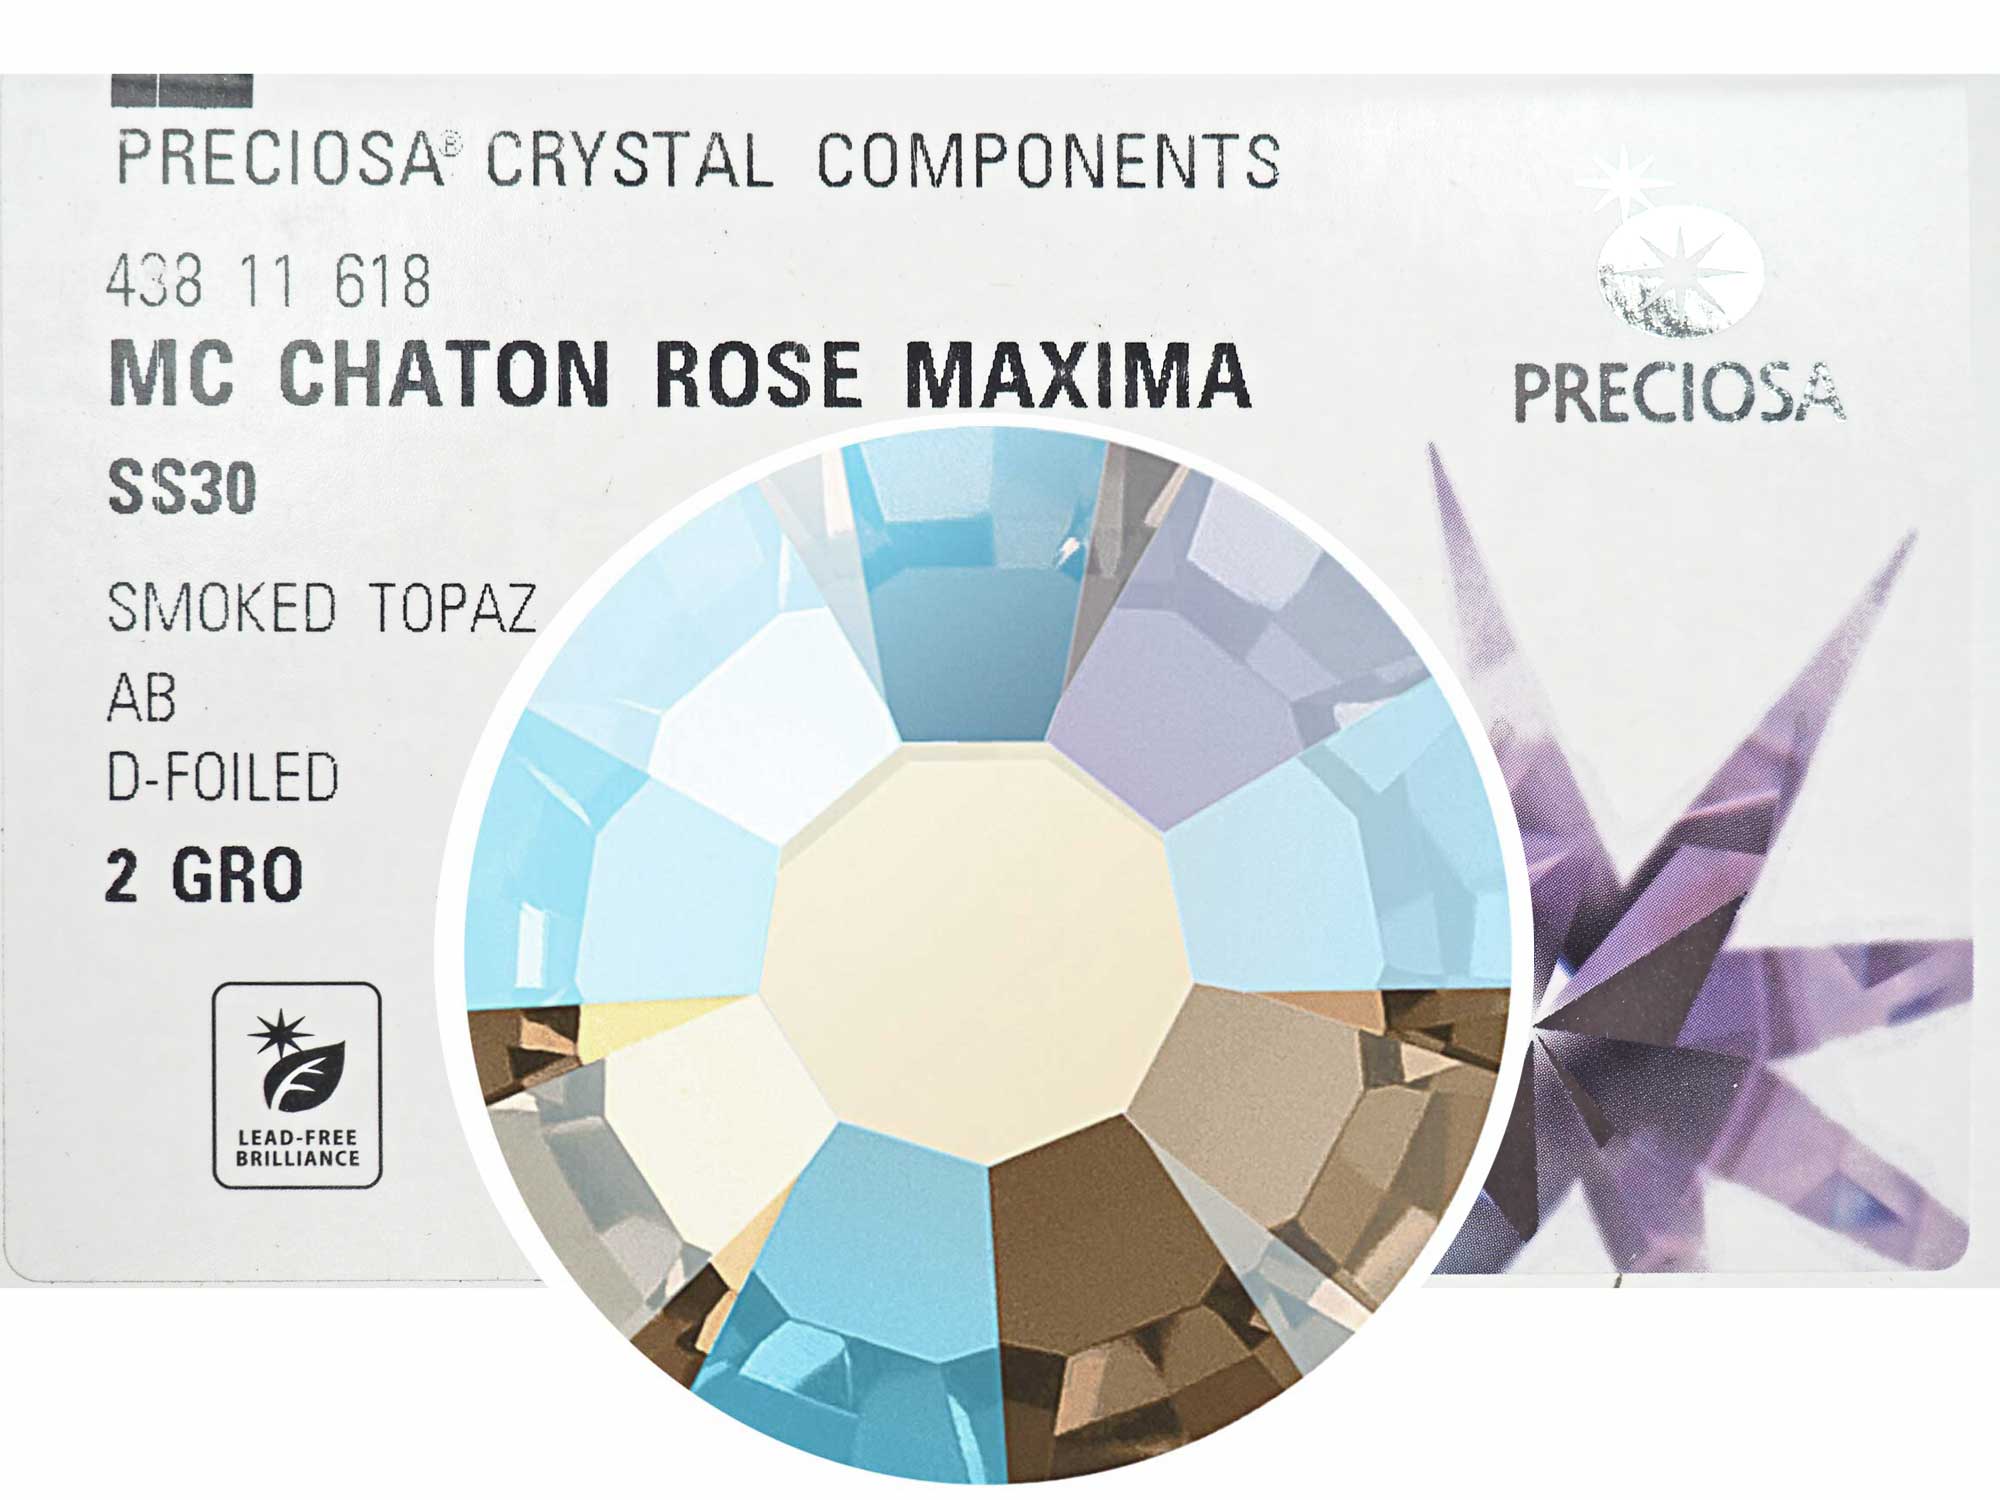 Smoked Topaz AB, Preciosa VIVA or MAXIMA Chaton Roses (Rhinestone Flatbacks), Genuine Czech Crystals, dark brown coated with Aurora Borealis